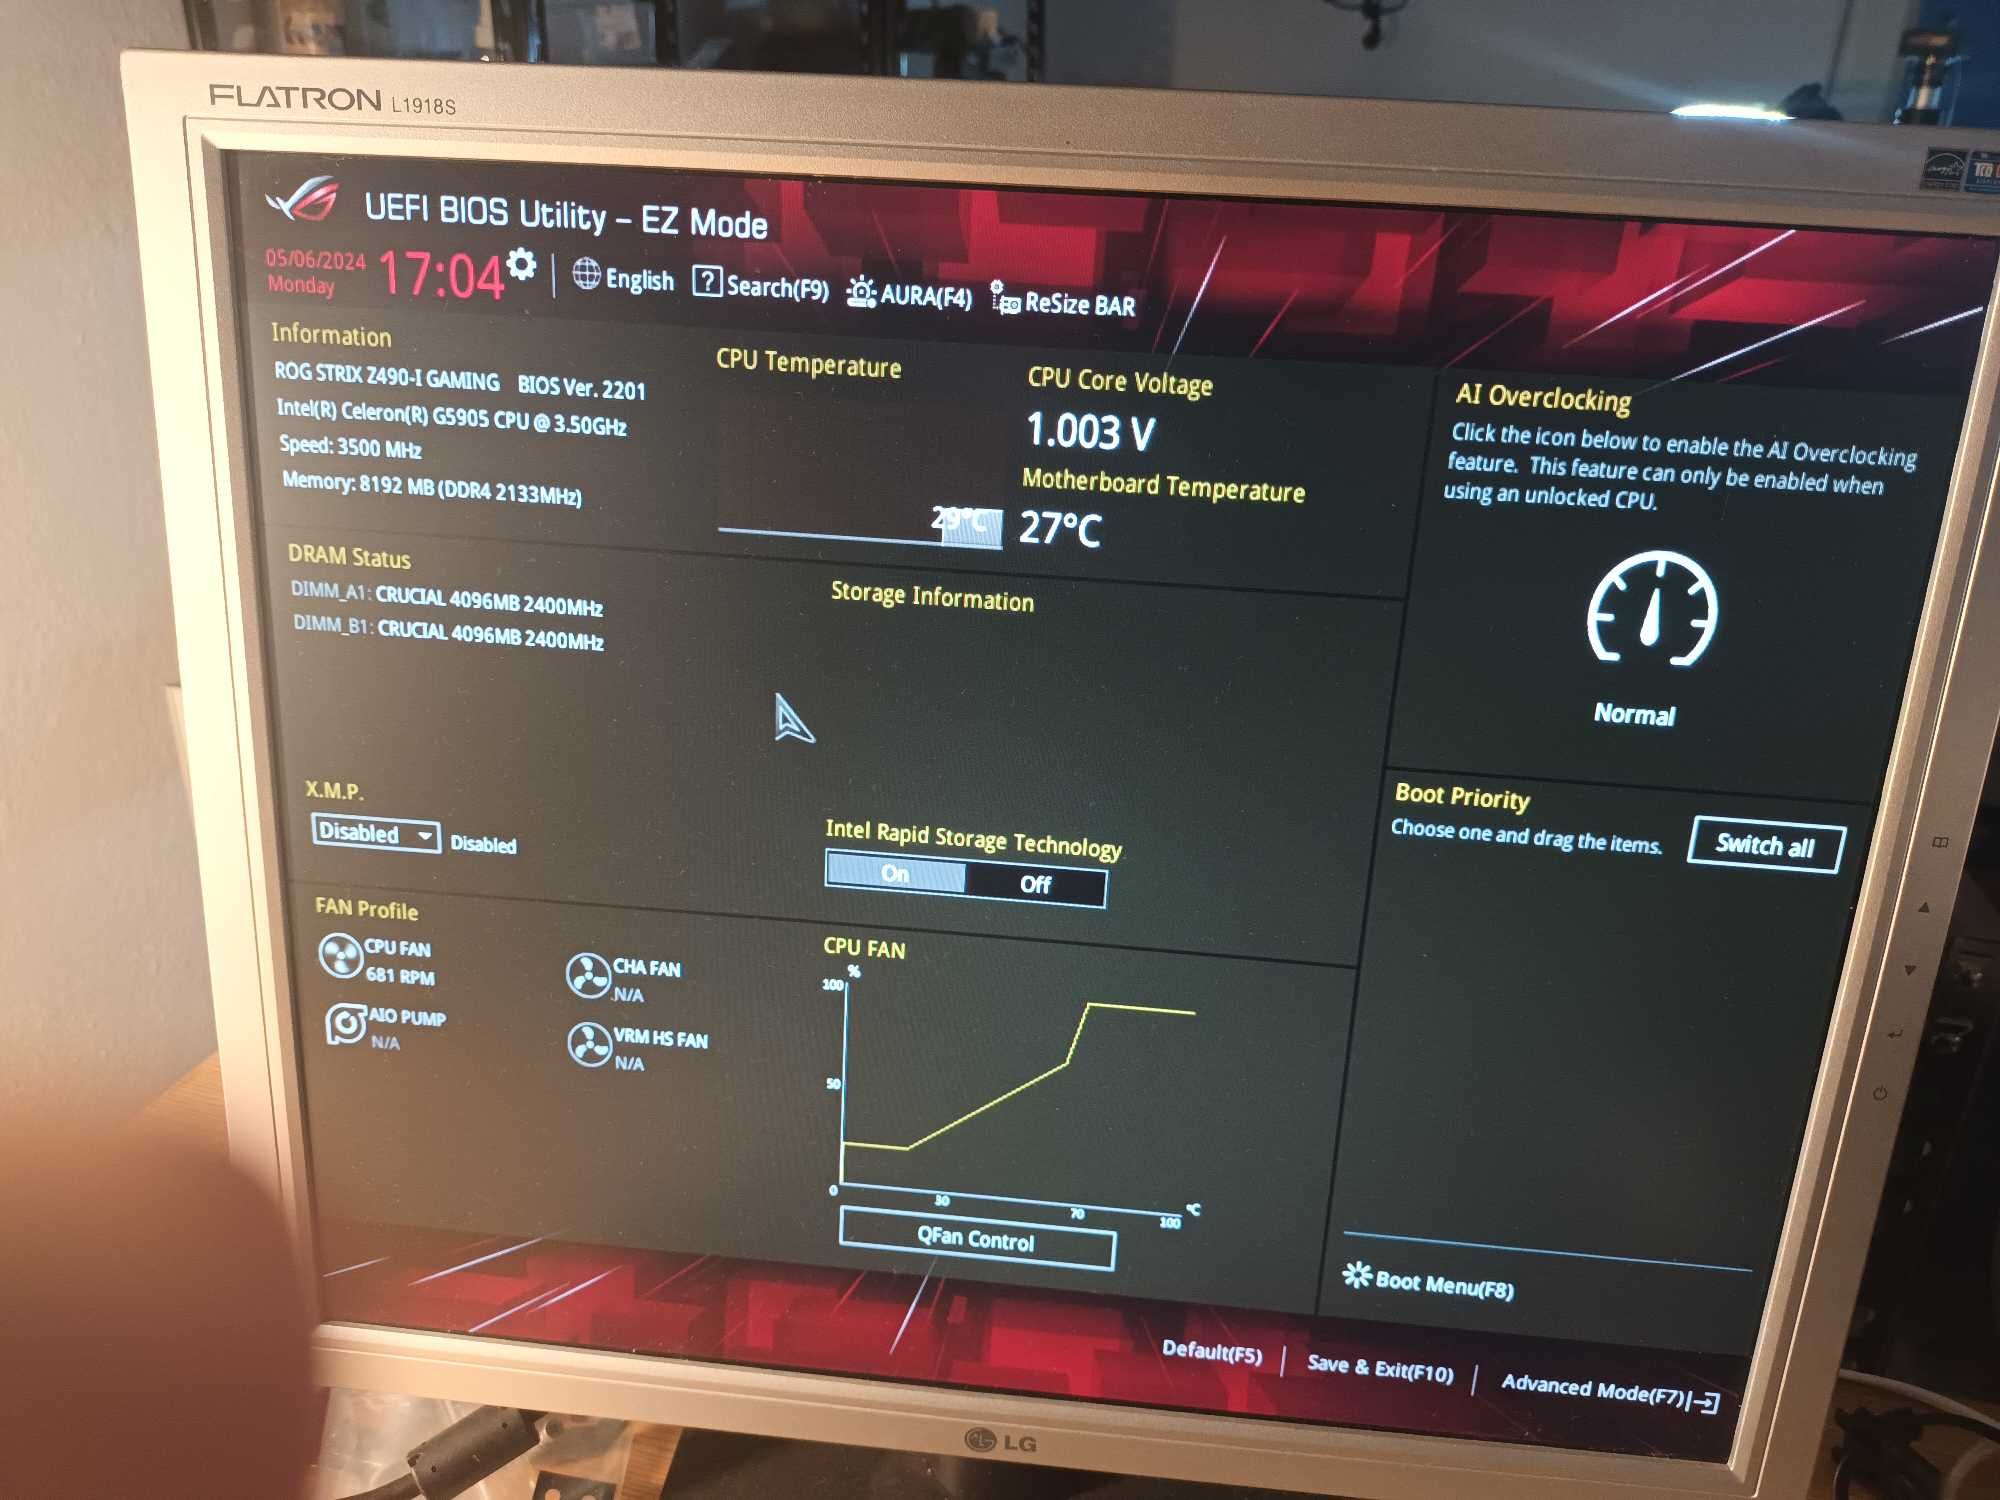 Motherboard Asus Rog Strix Z490 I Gaming (ITX)